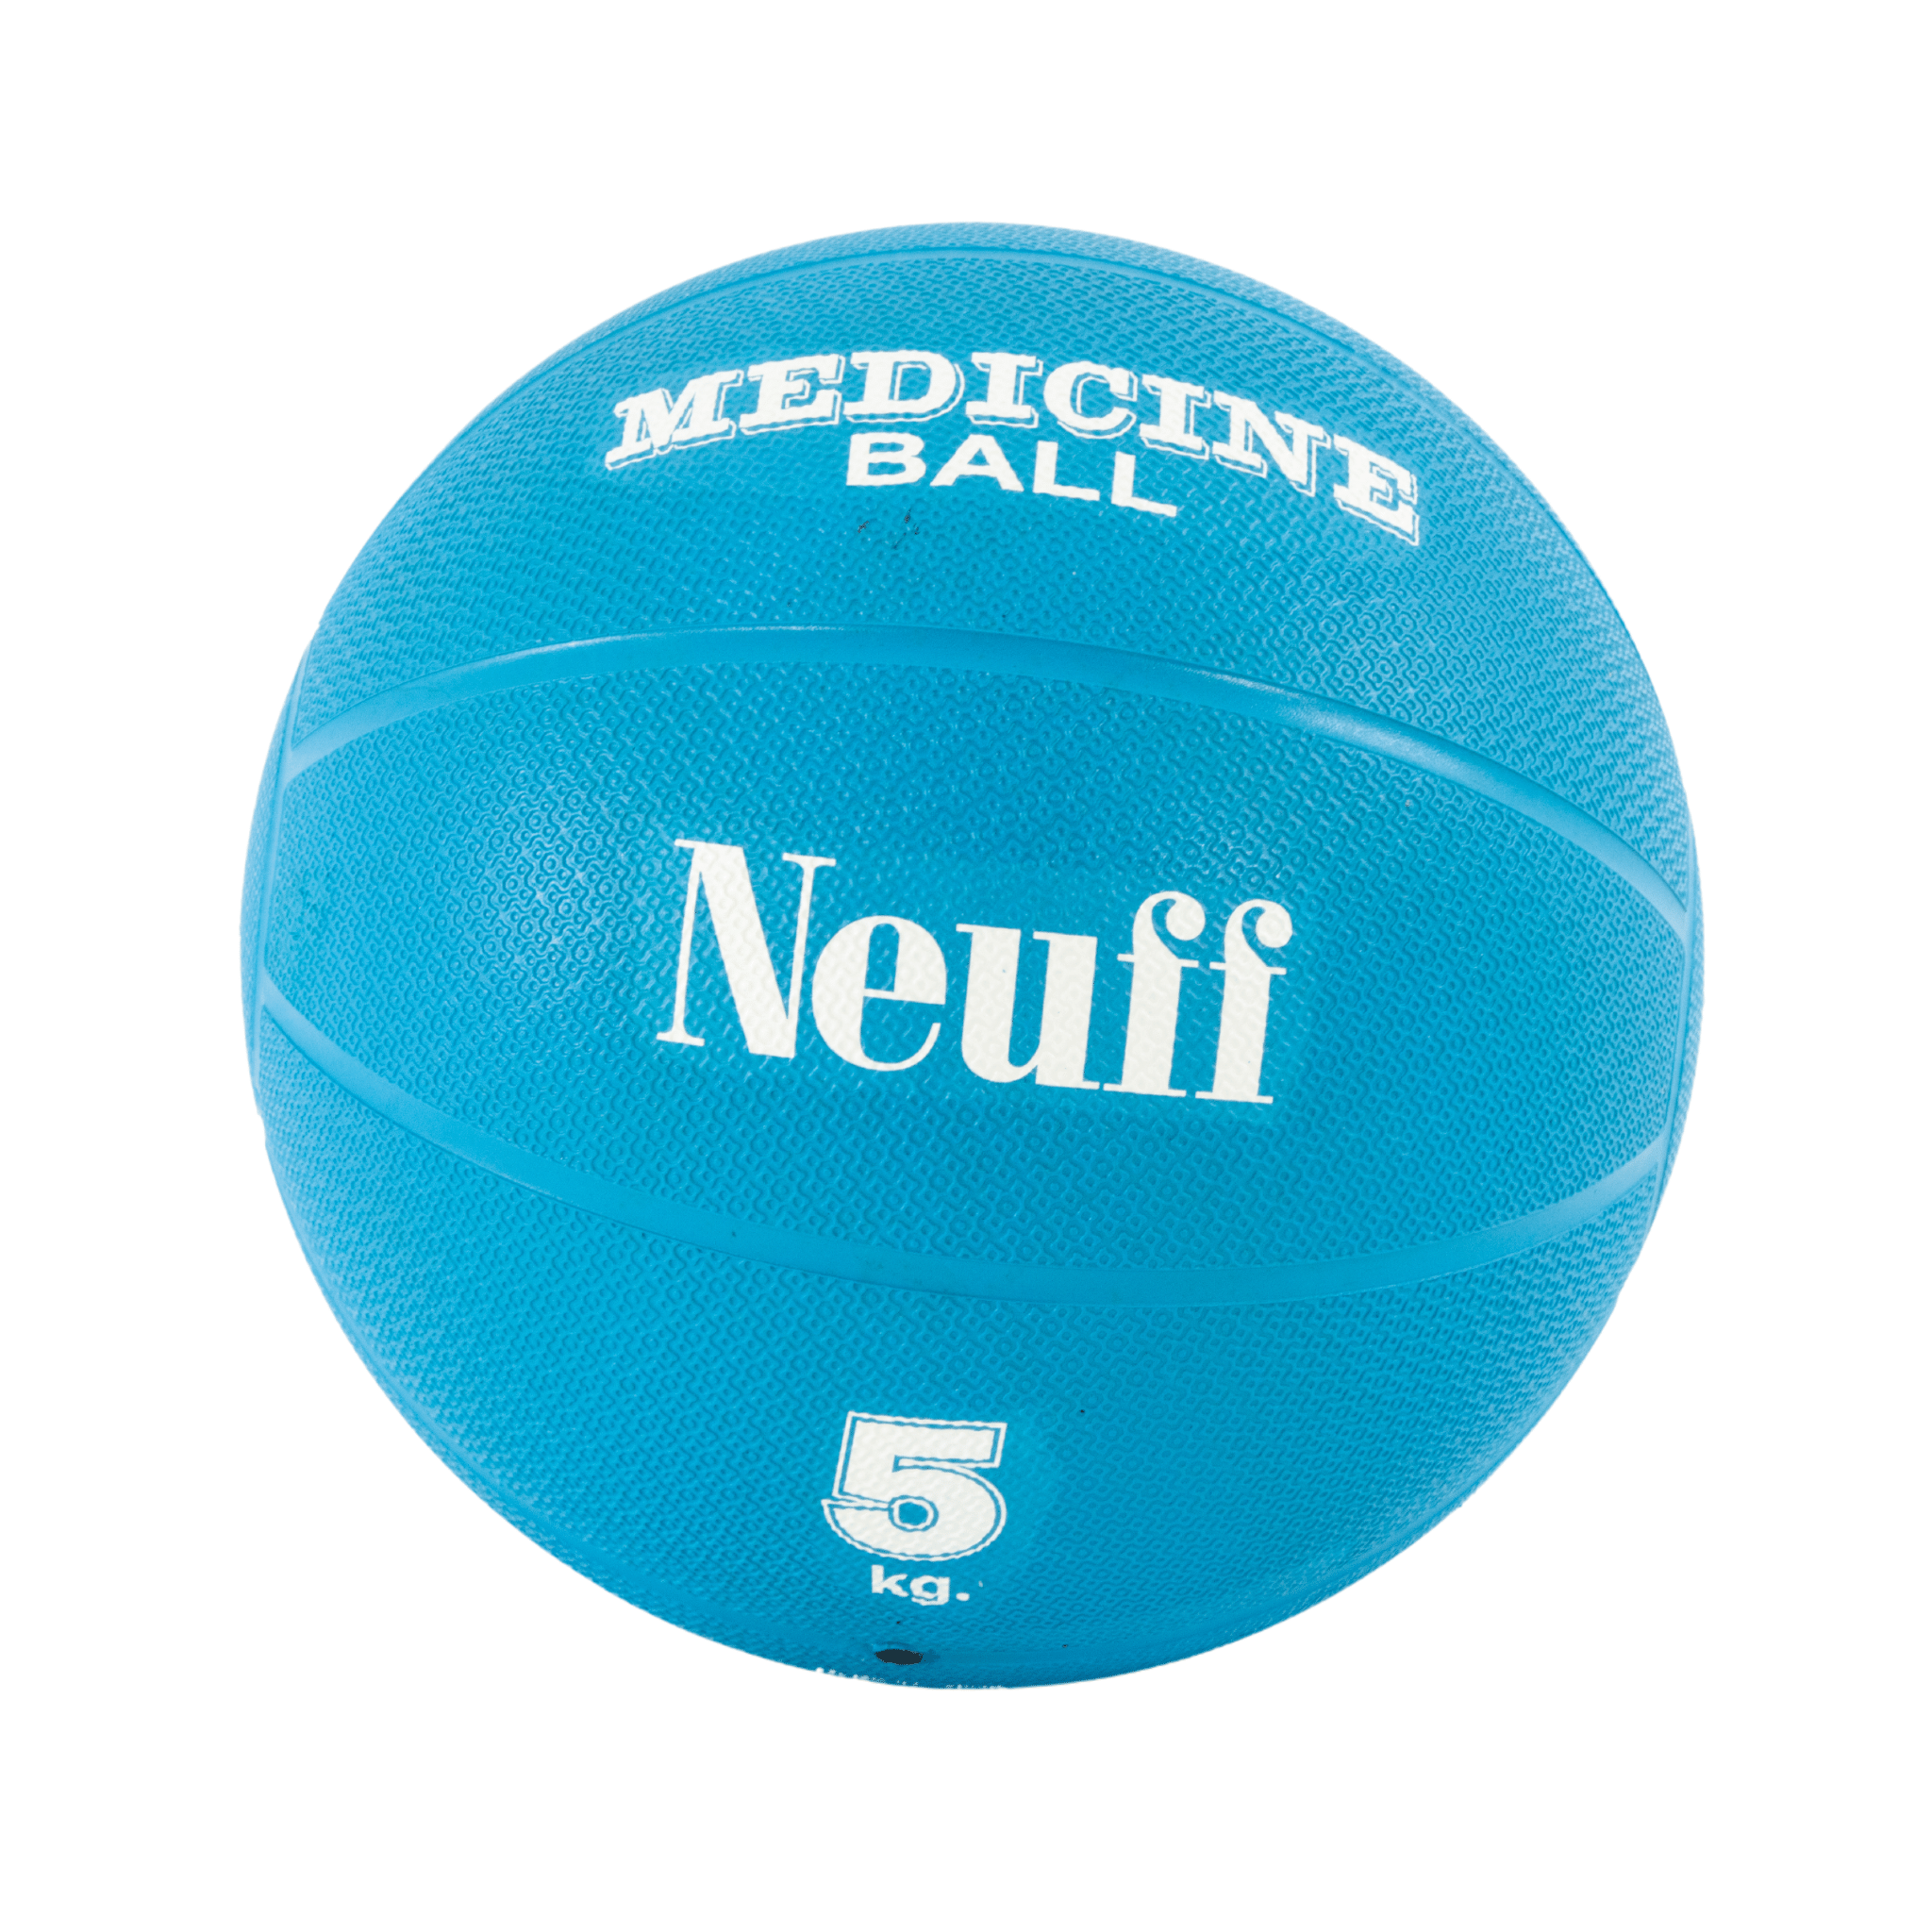 Neuff Medicine Ball | 5 kg | Blue with white logo